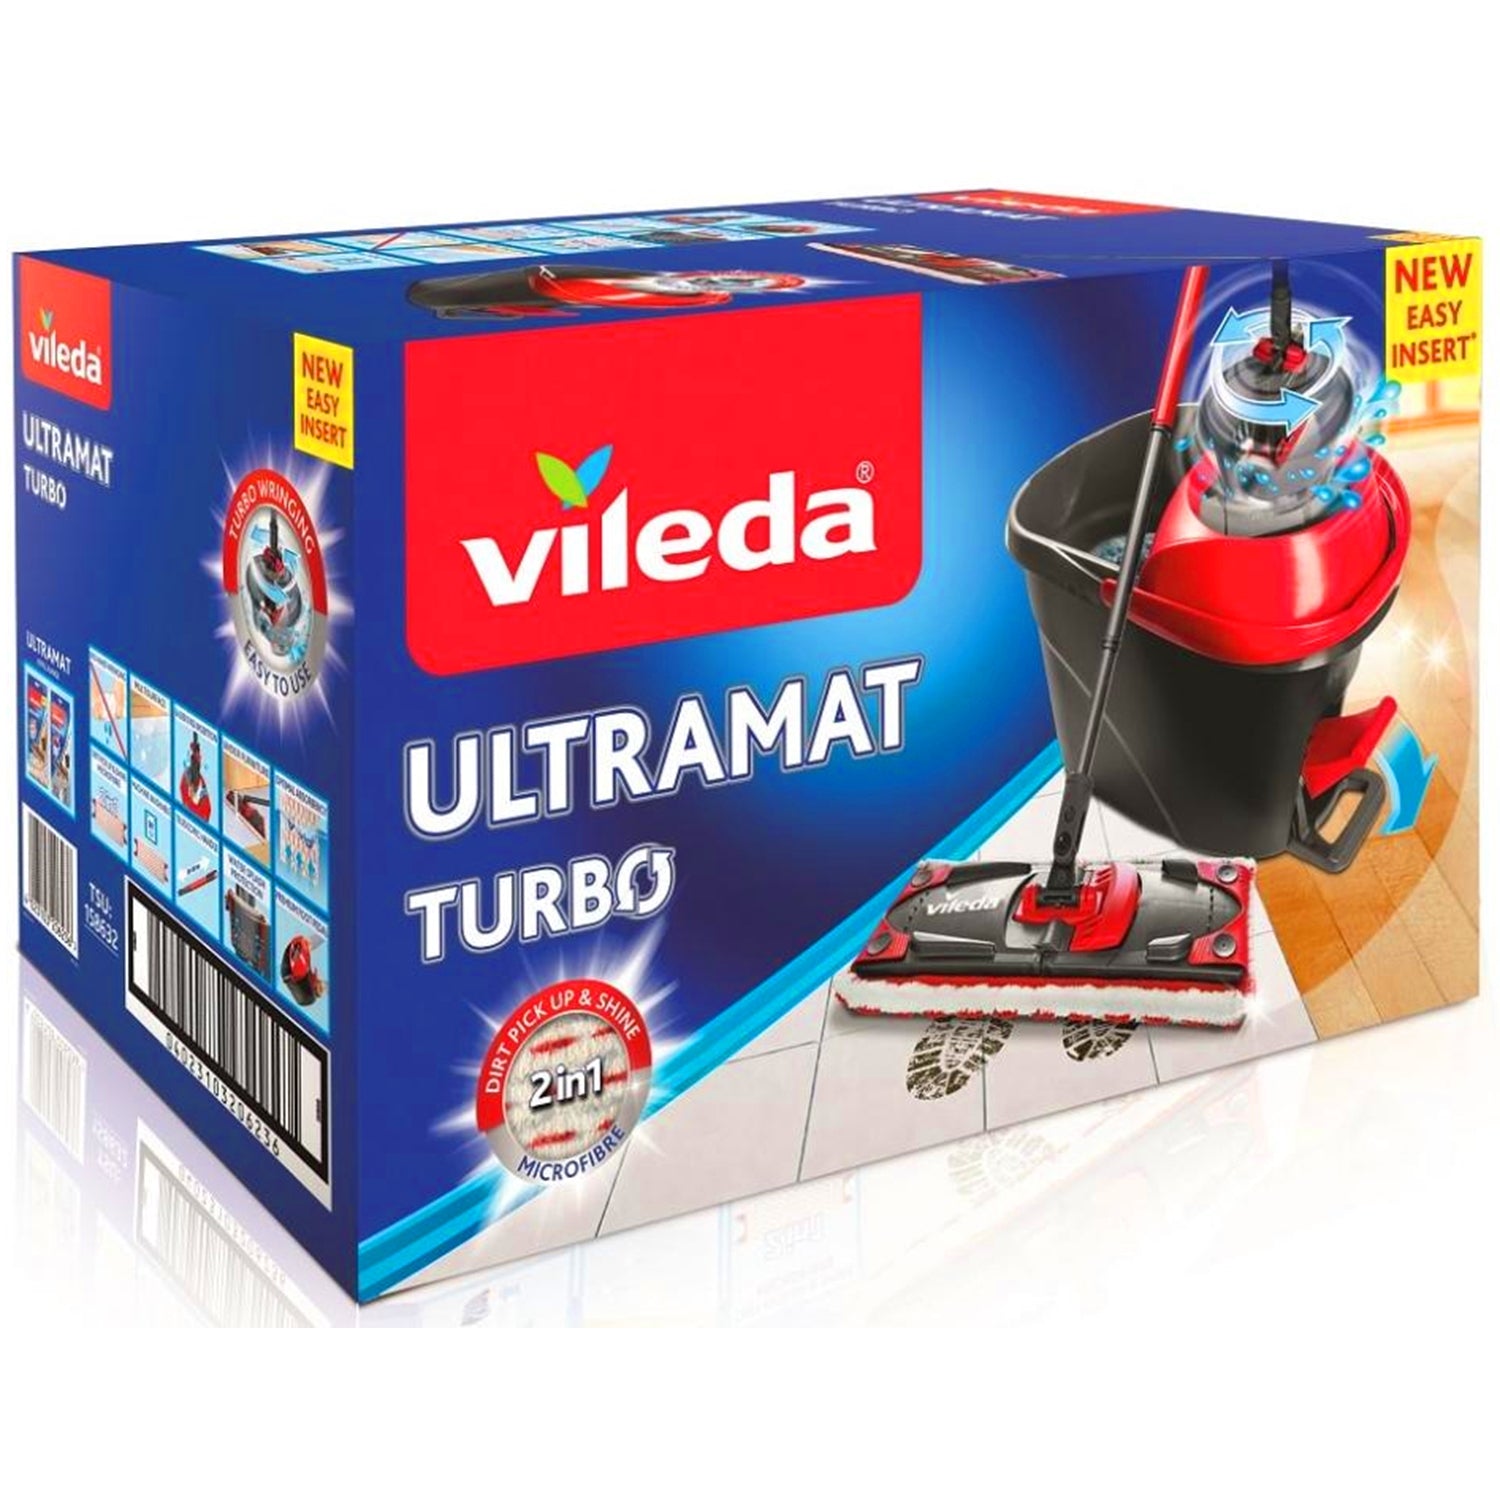 Vileda Ultramat Turbo Flat XL 161023 Mop + Bucket set Cleaning